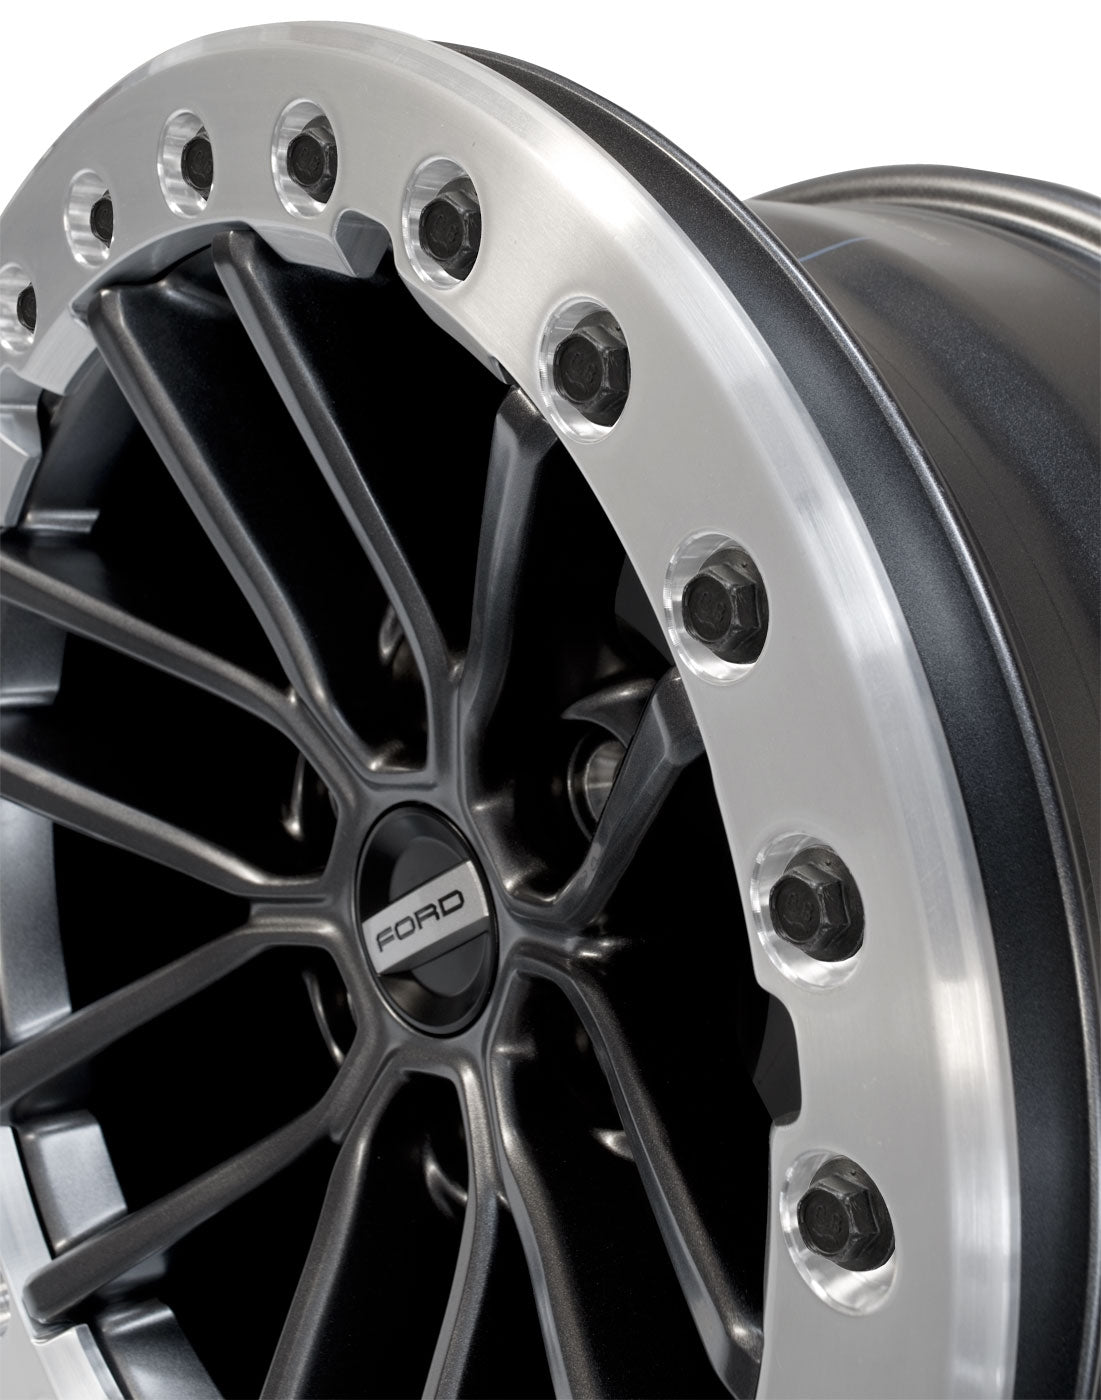 2019-2020 Ford F150 Raptor OEM Forged Aluminum Bead-lock Wheel Rings - Set of 4